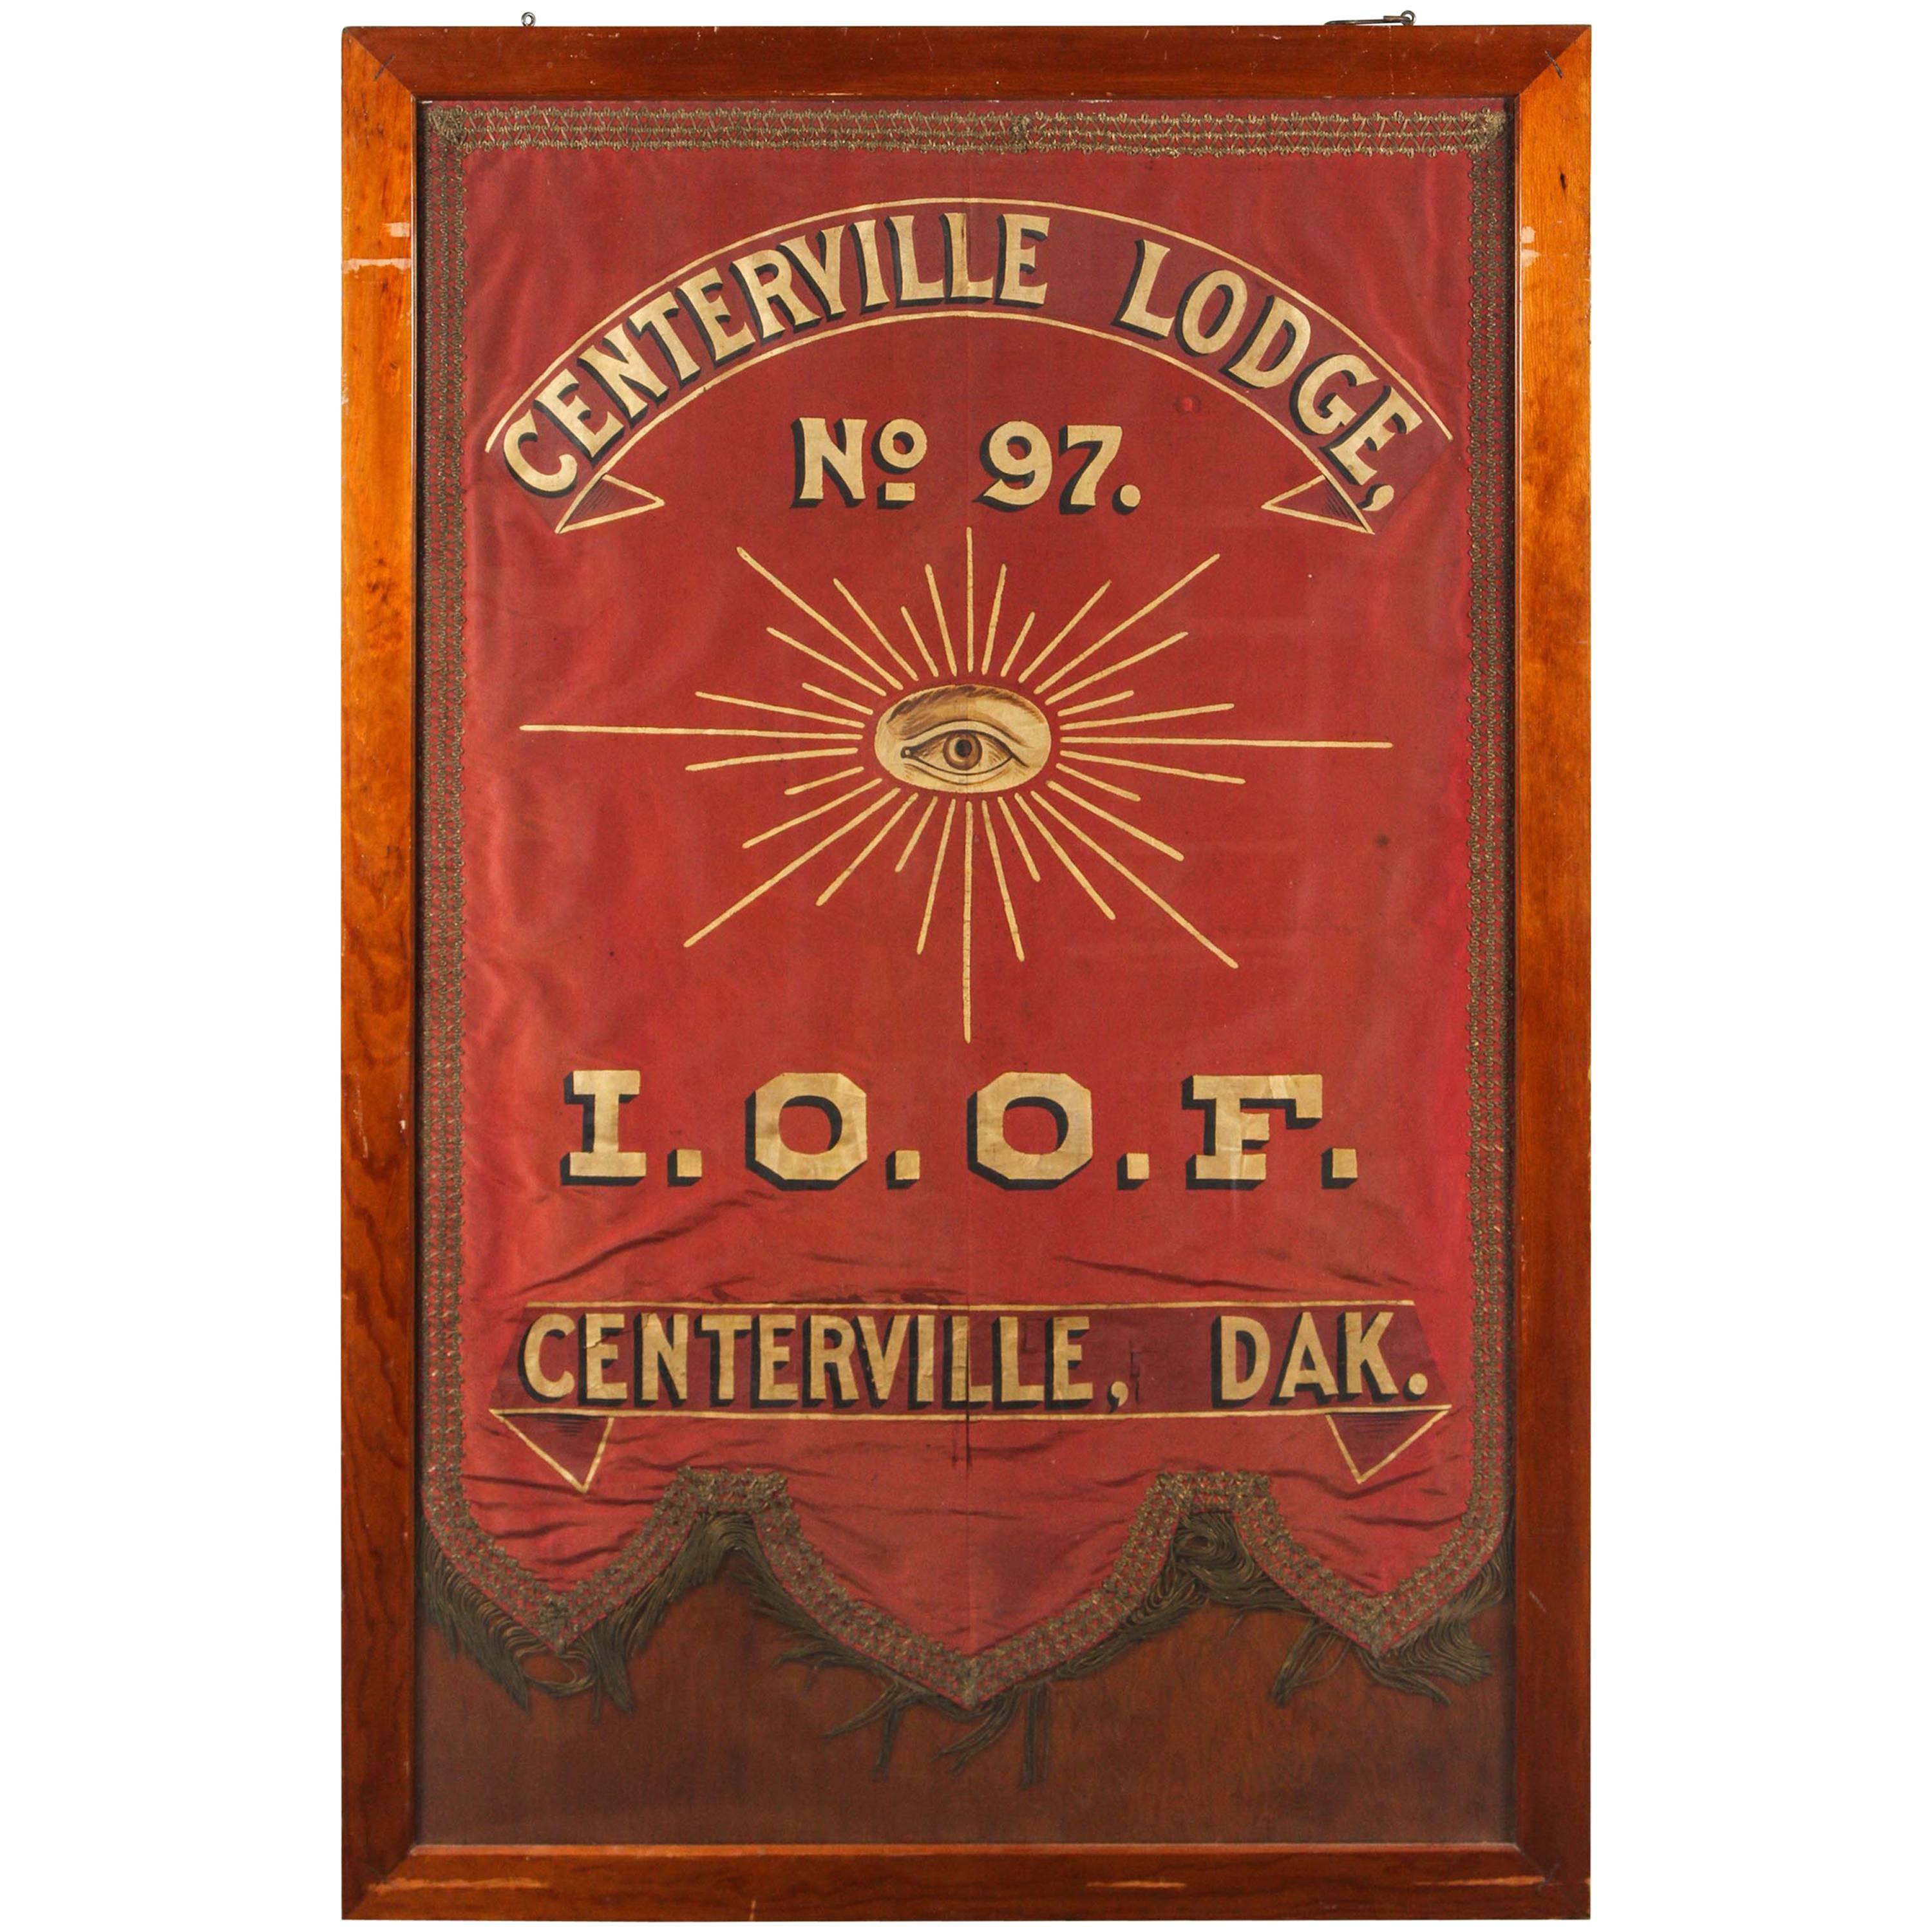 Banner du Lodge Odd Fellows des années 1880 du Dakota 